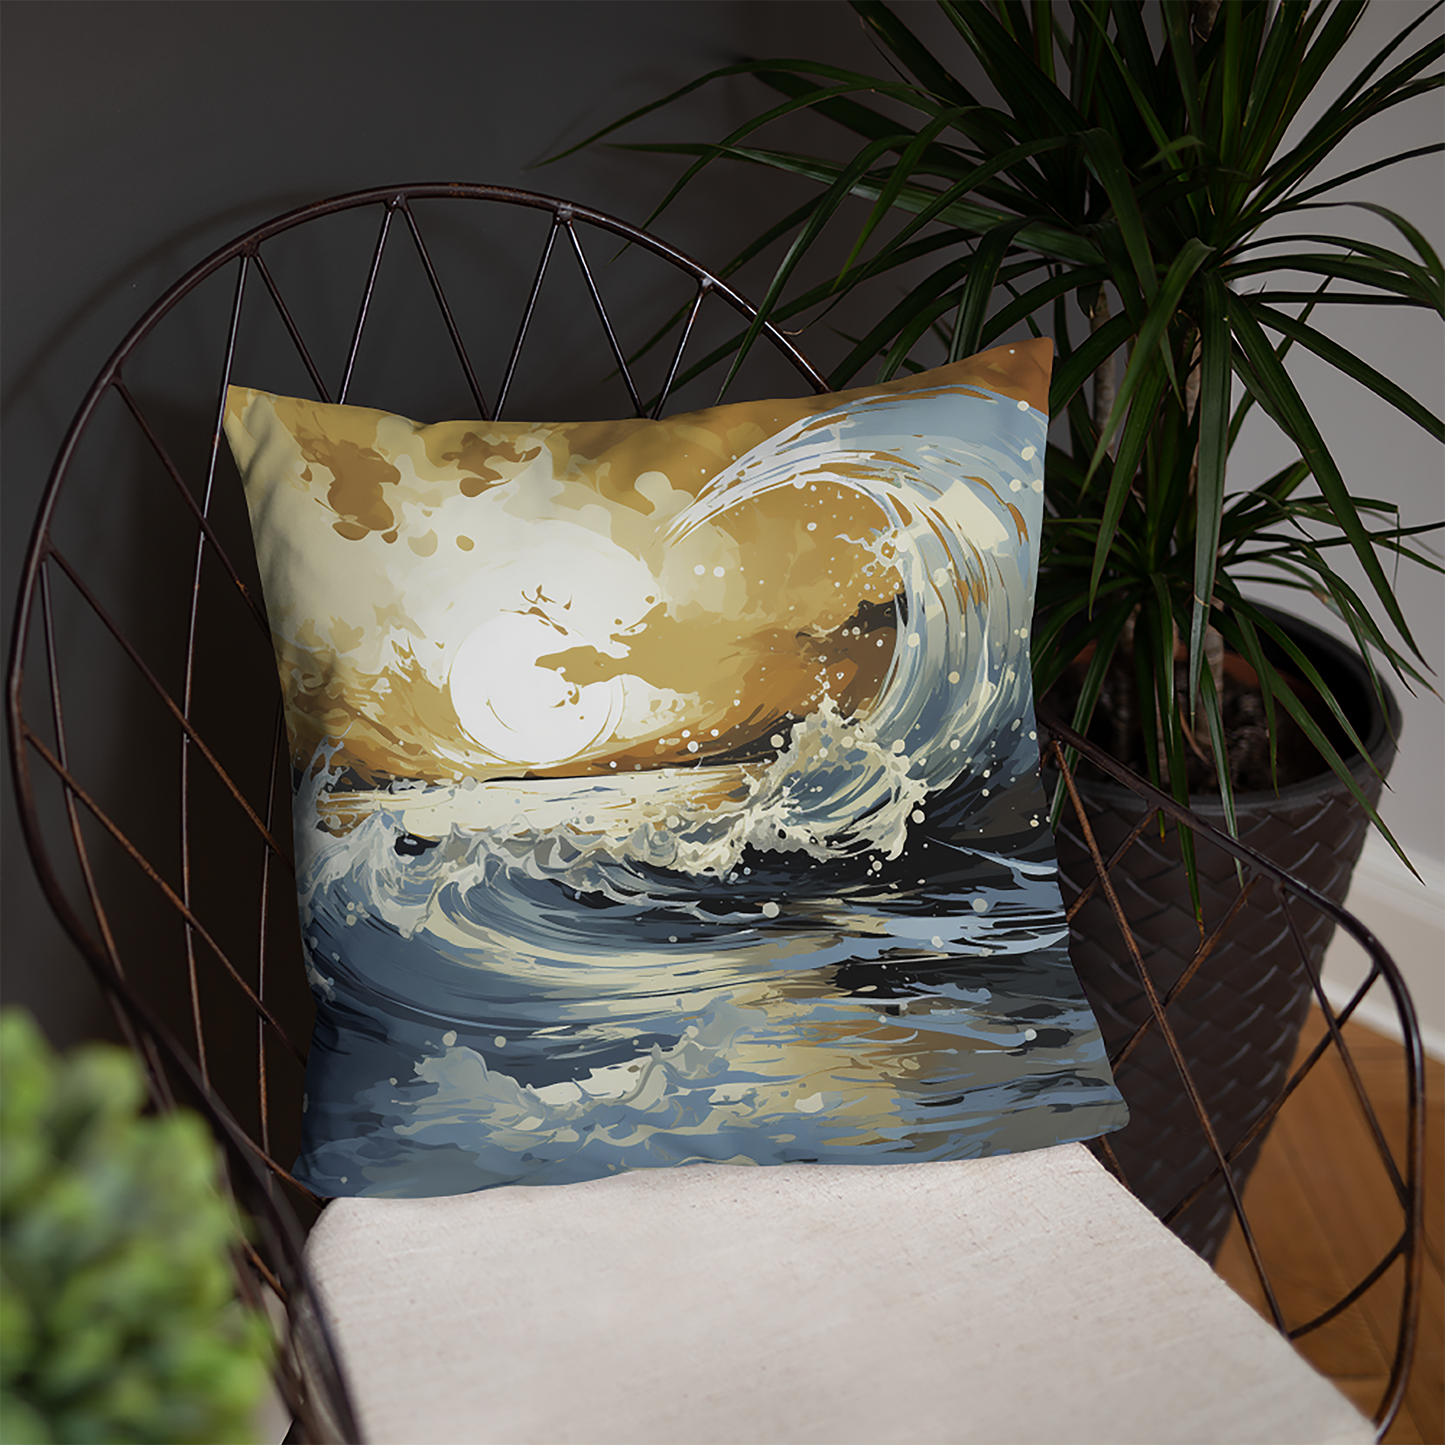 Beach Throw Pillow Vibrant Ocean Wave Polyester Decorative Cushion 18x18